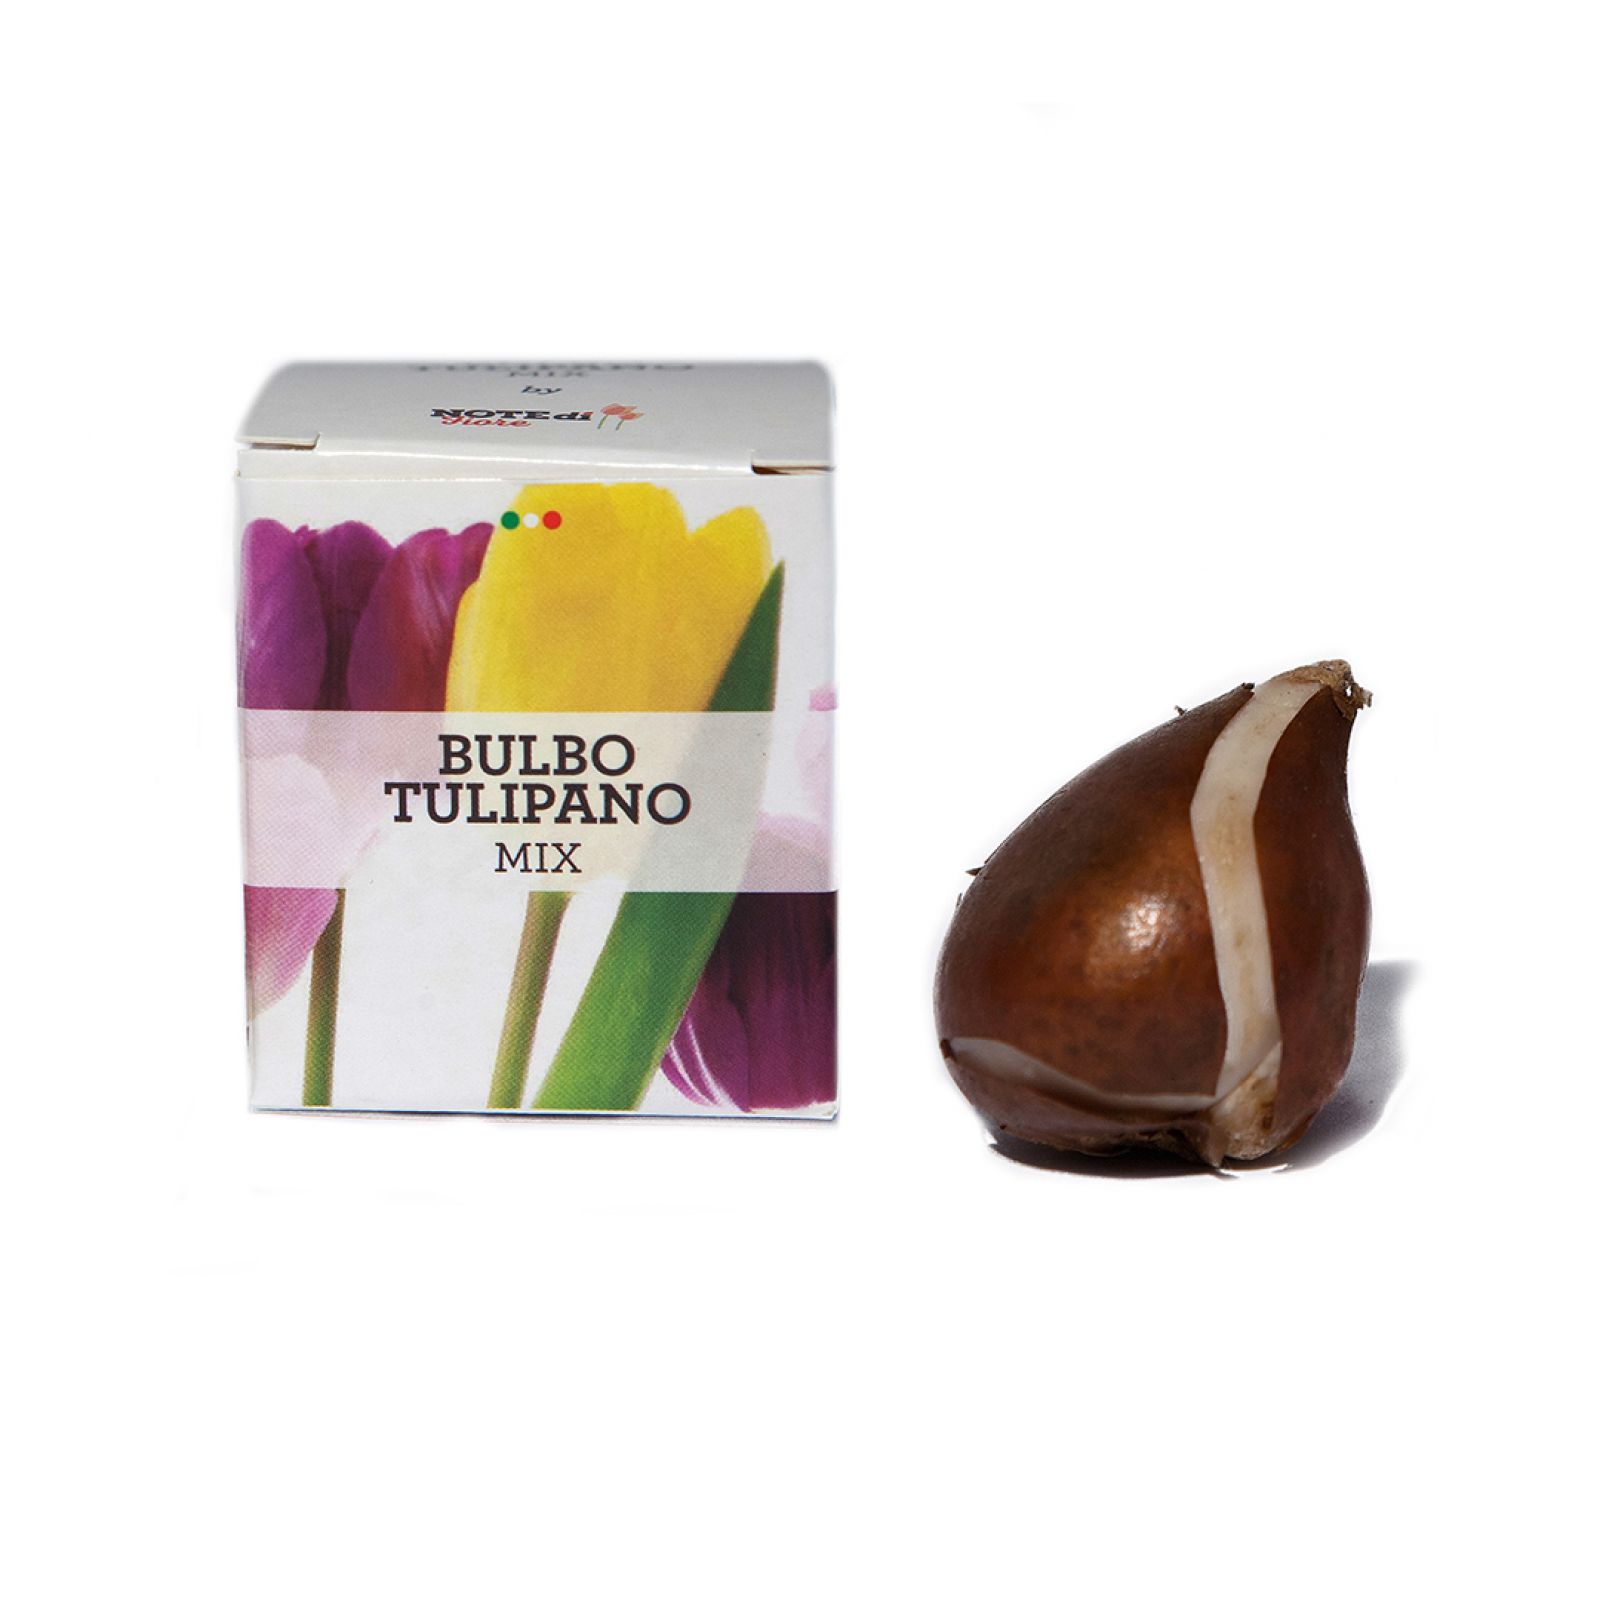 Bulbo Tulipano Mix